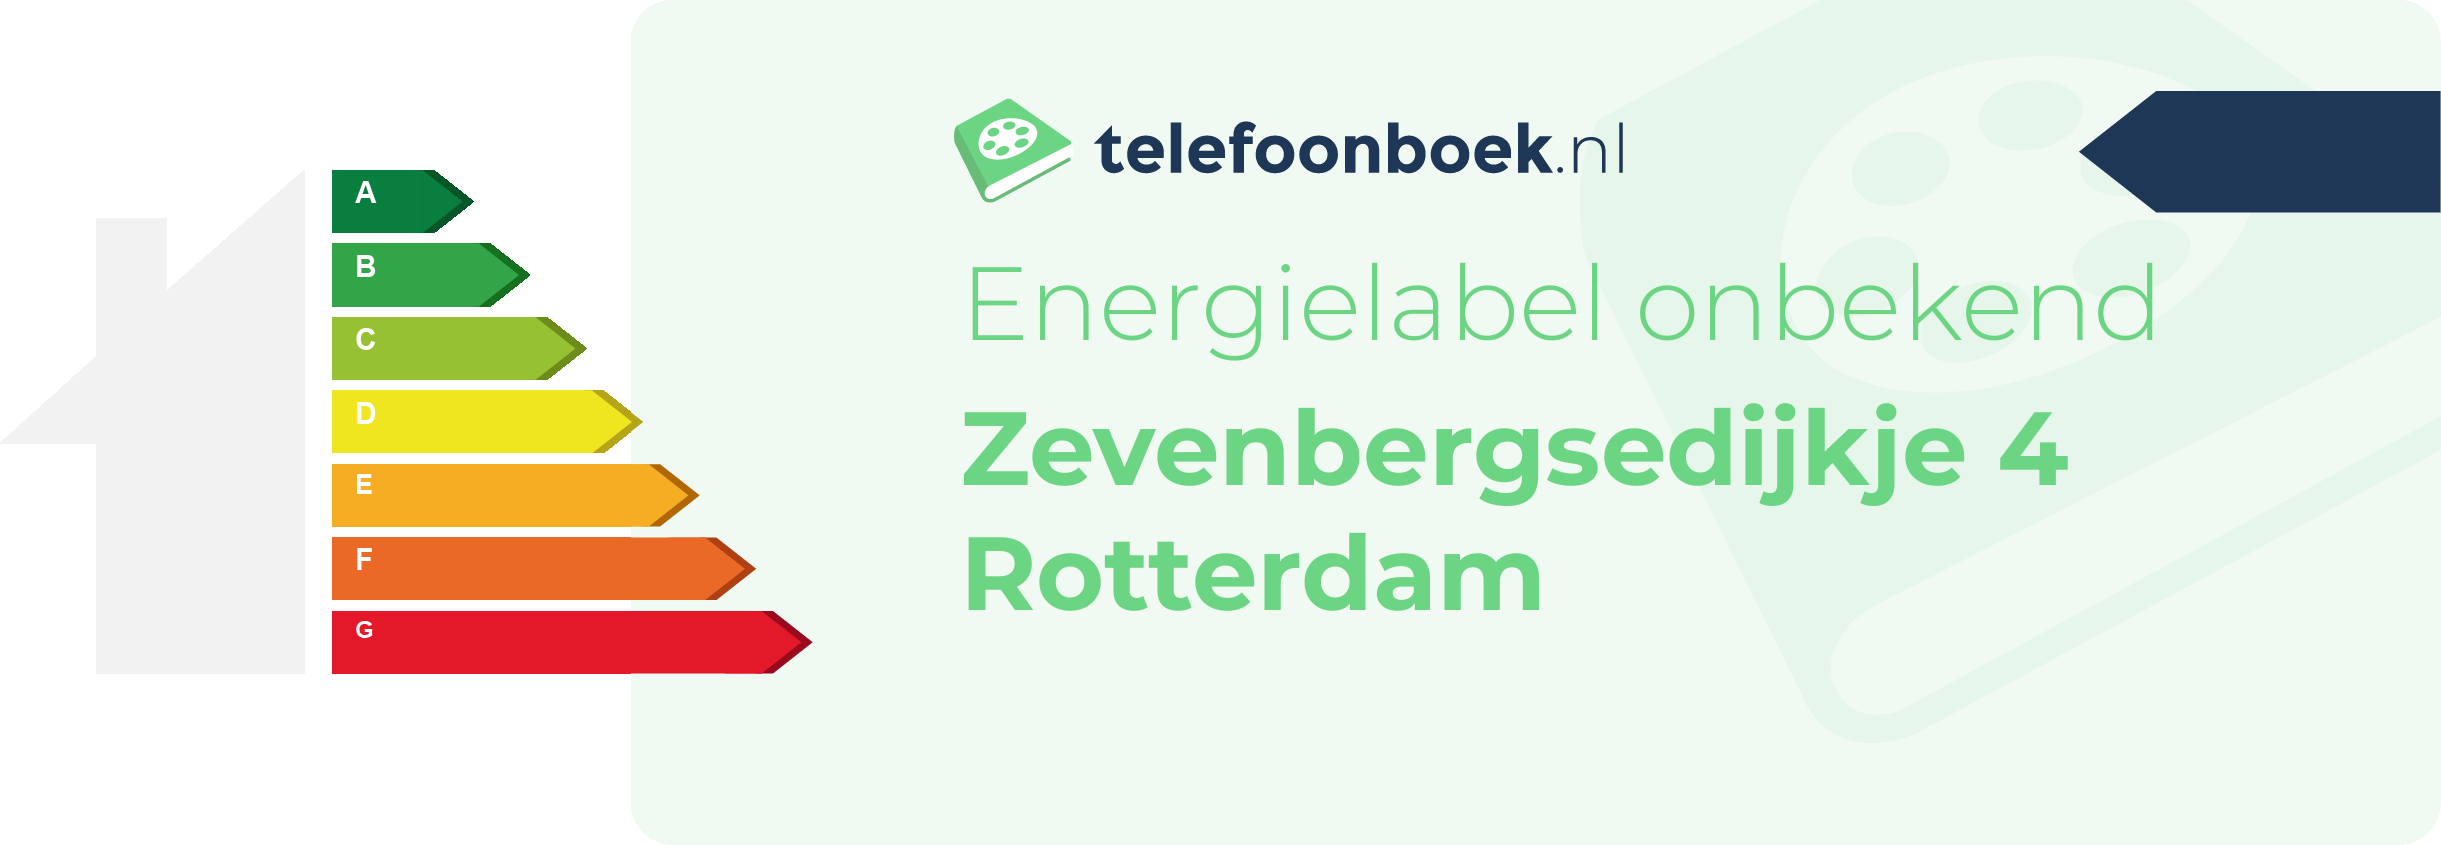 Energielabel Zevenbergsedijkje 4 Rotterdam